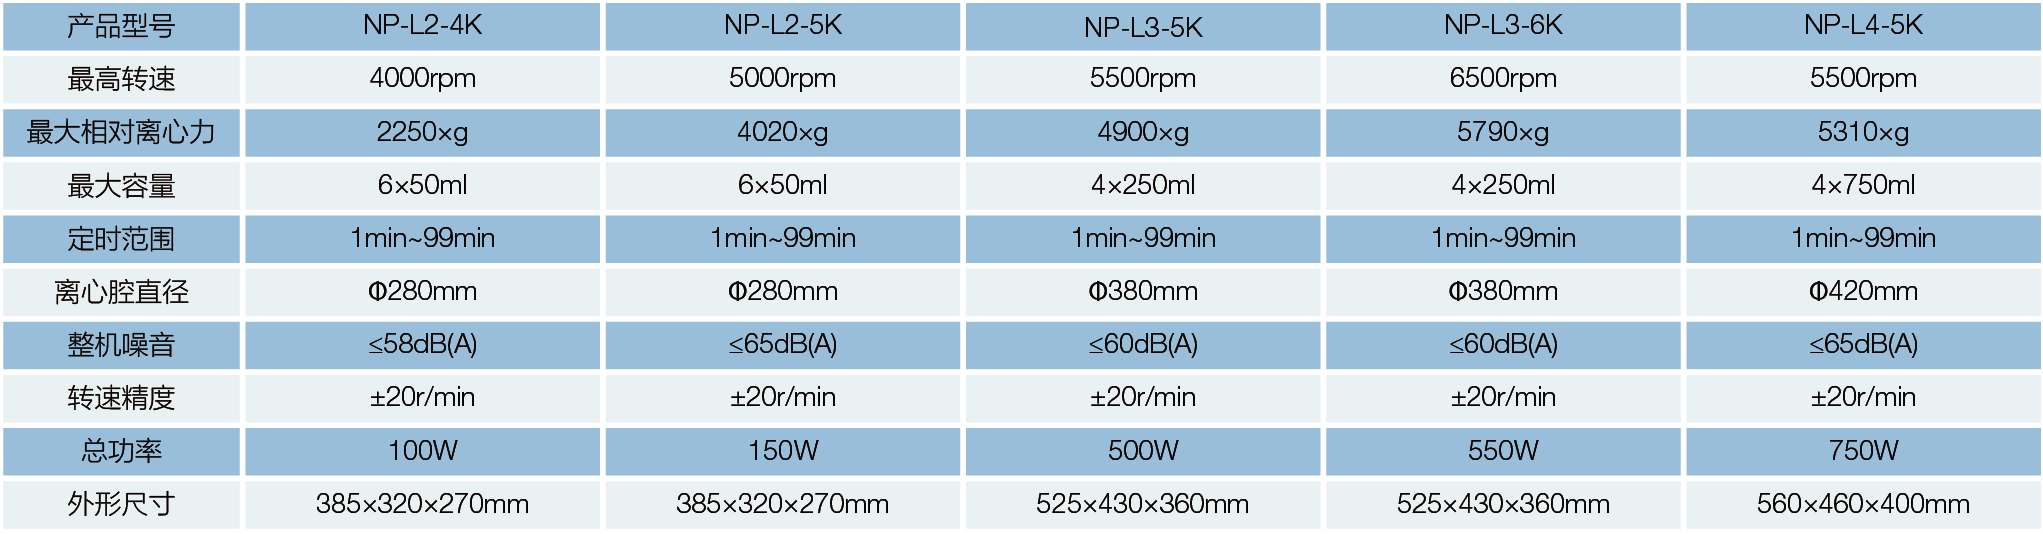 NP-L3-5K 台式低速离心机(图1)